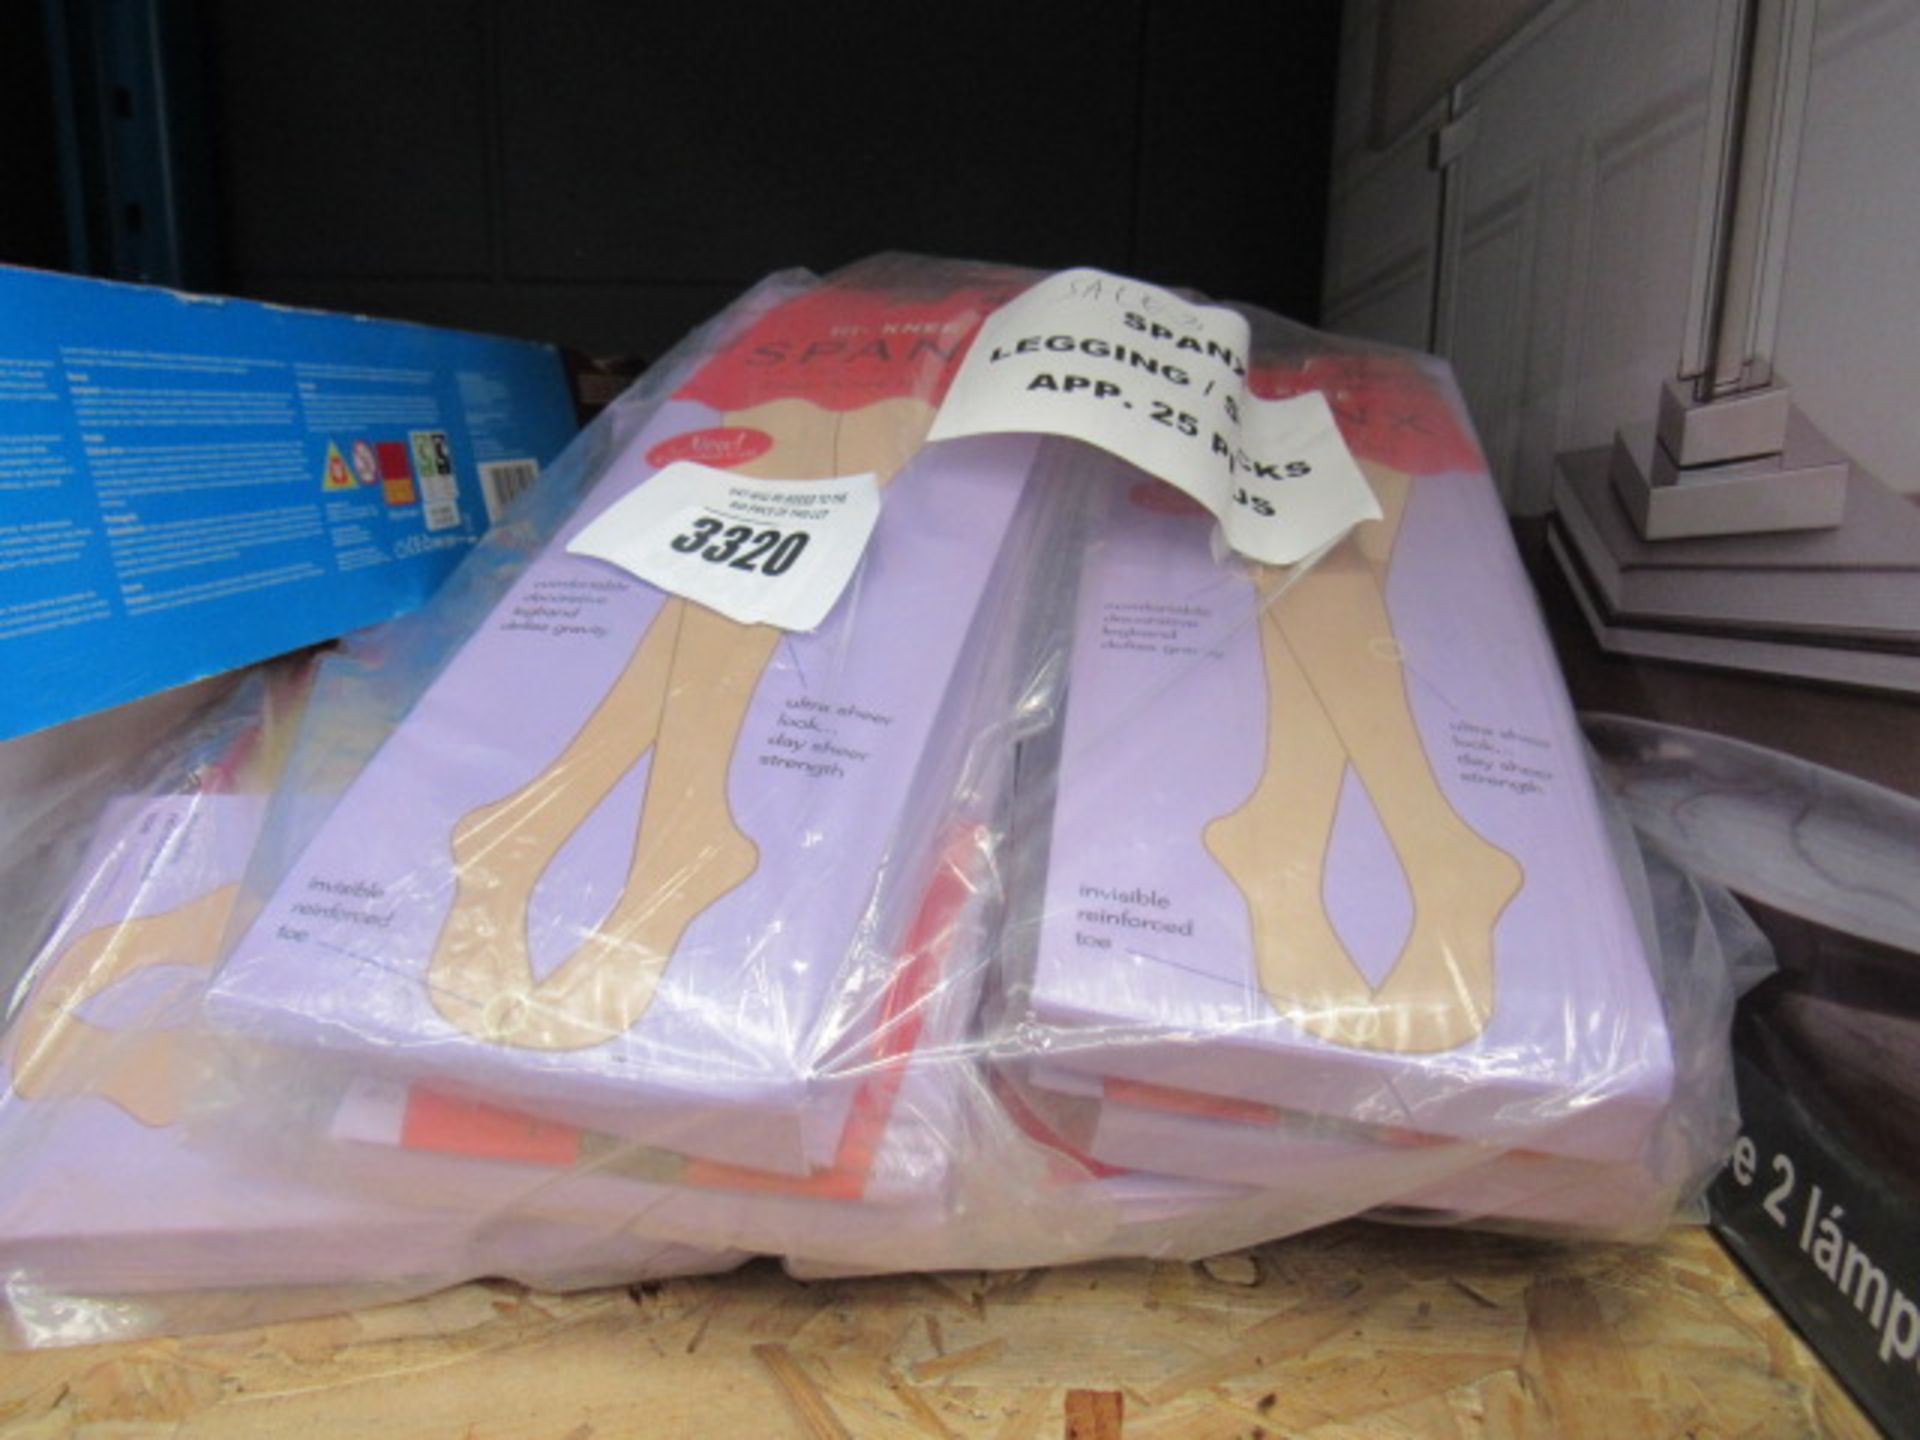 3333 Bag of spanx high knee stockings